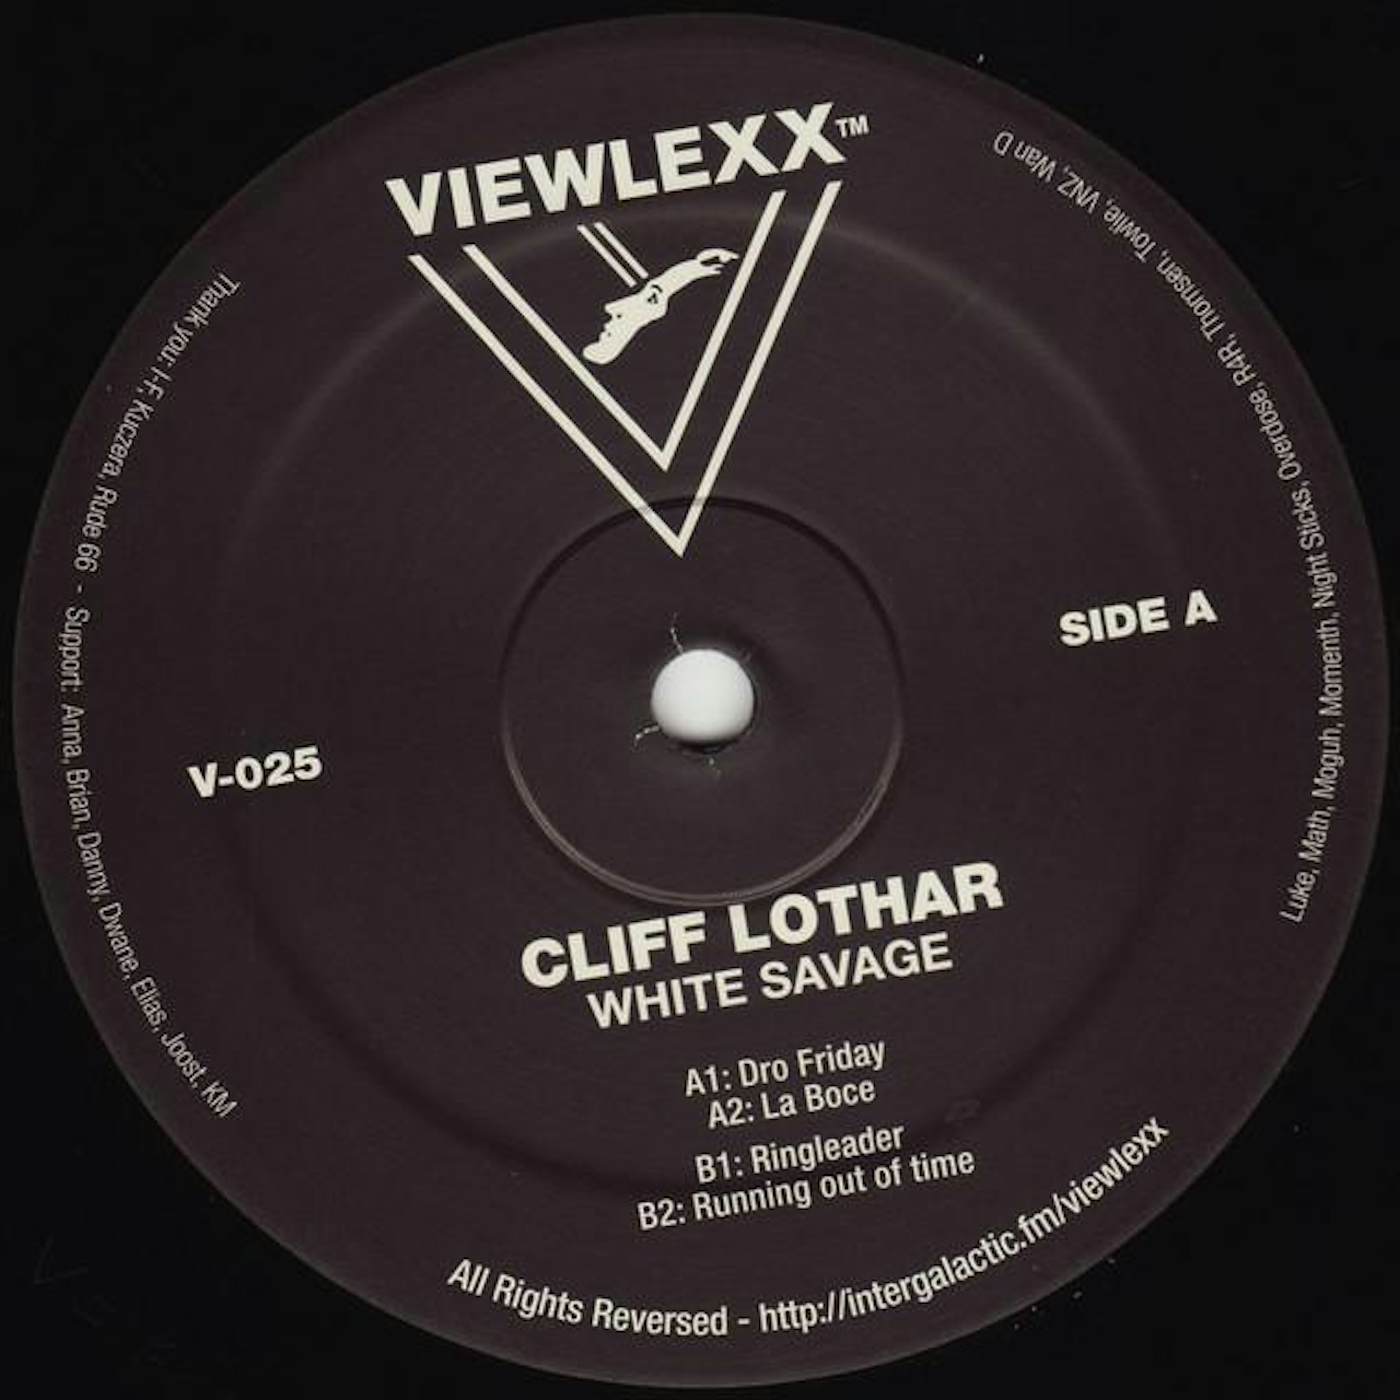 Cliff Lothar